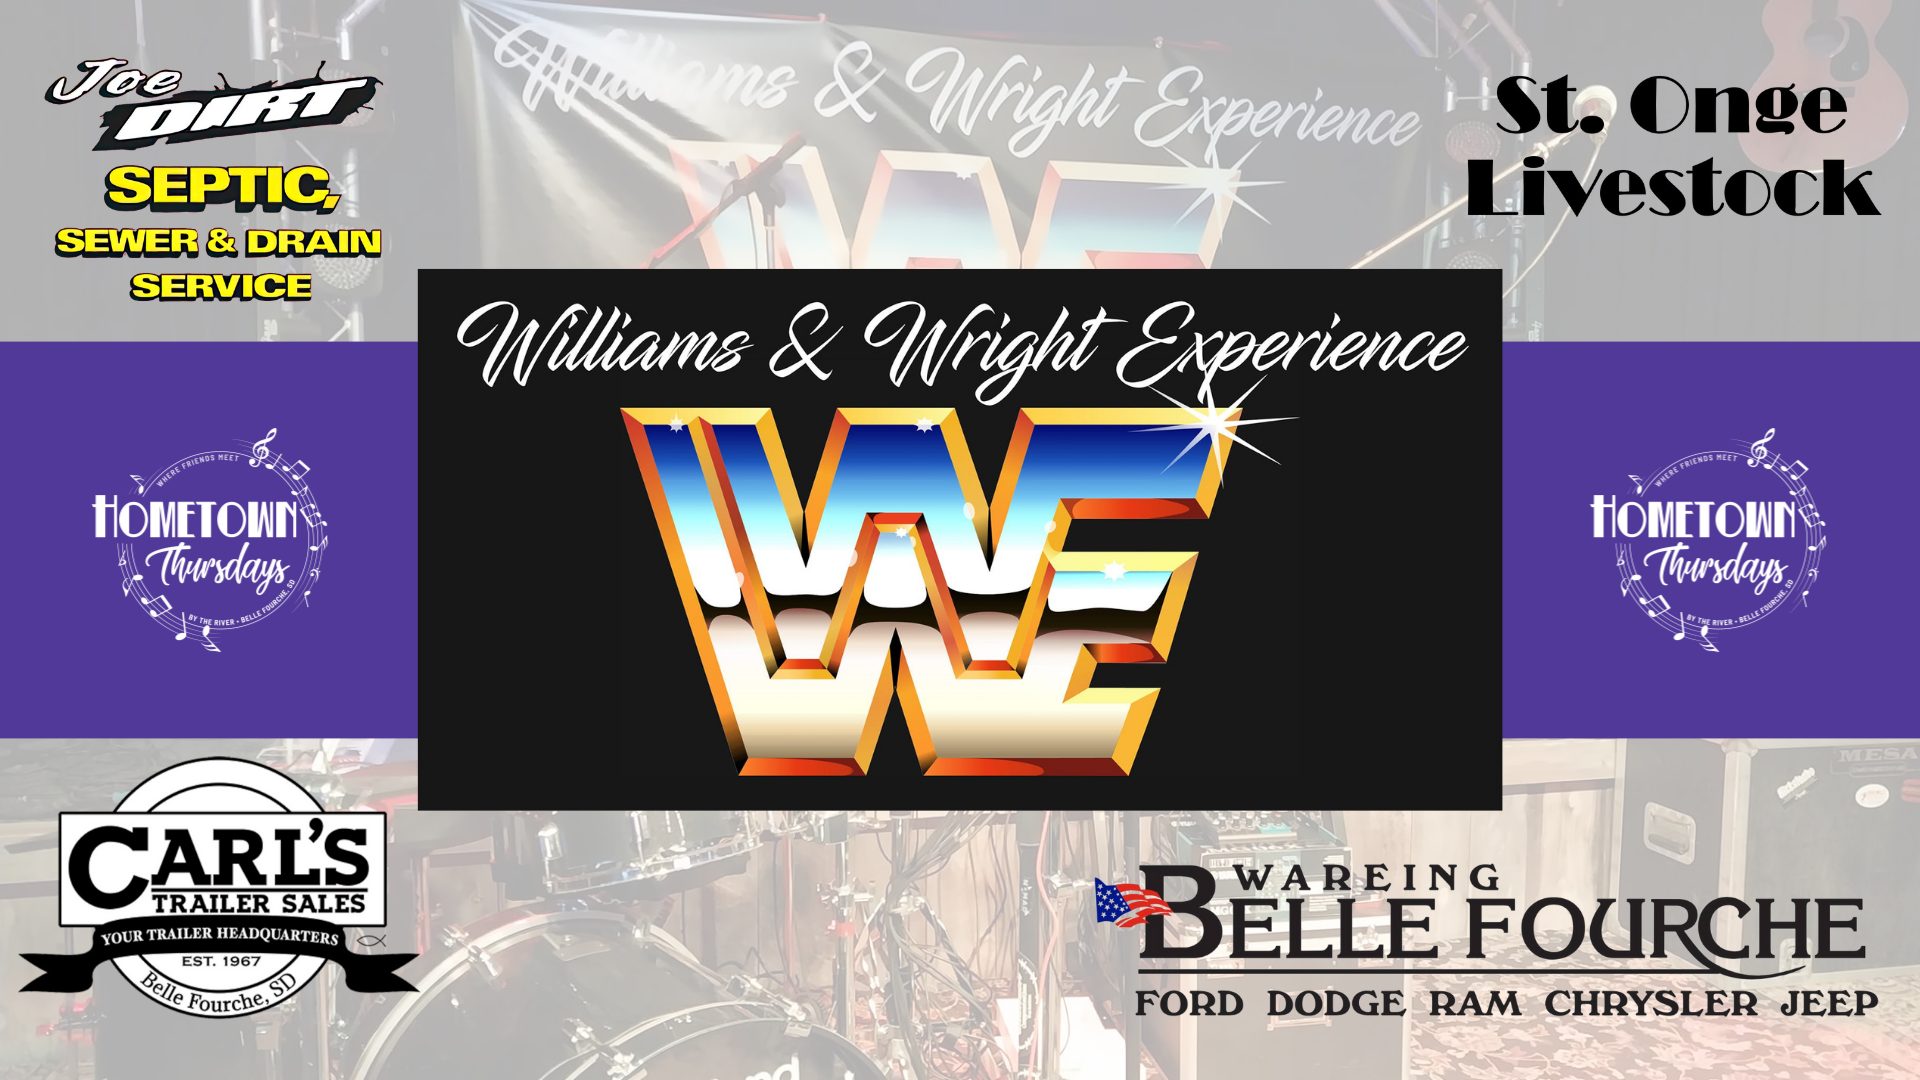 Williams & Wright Experience